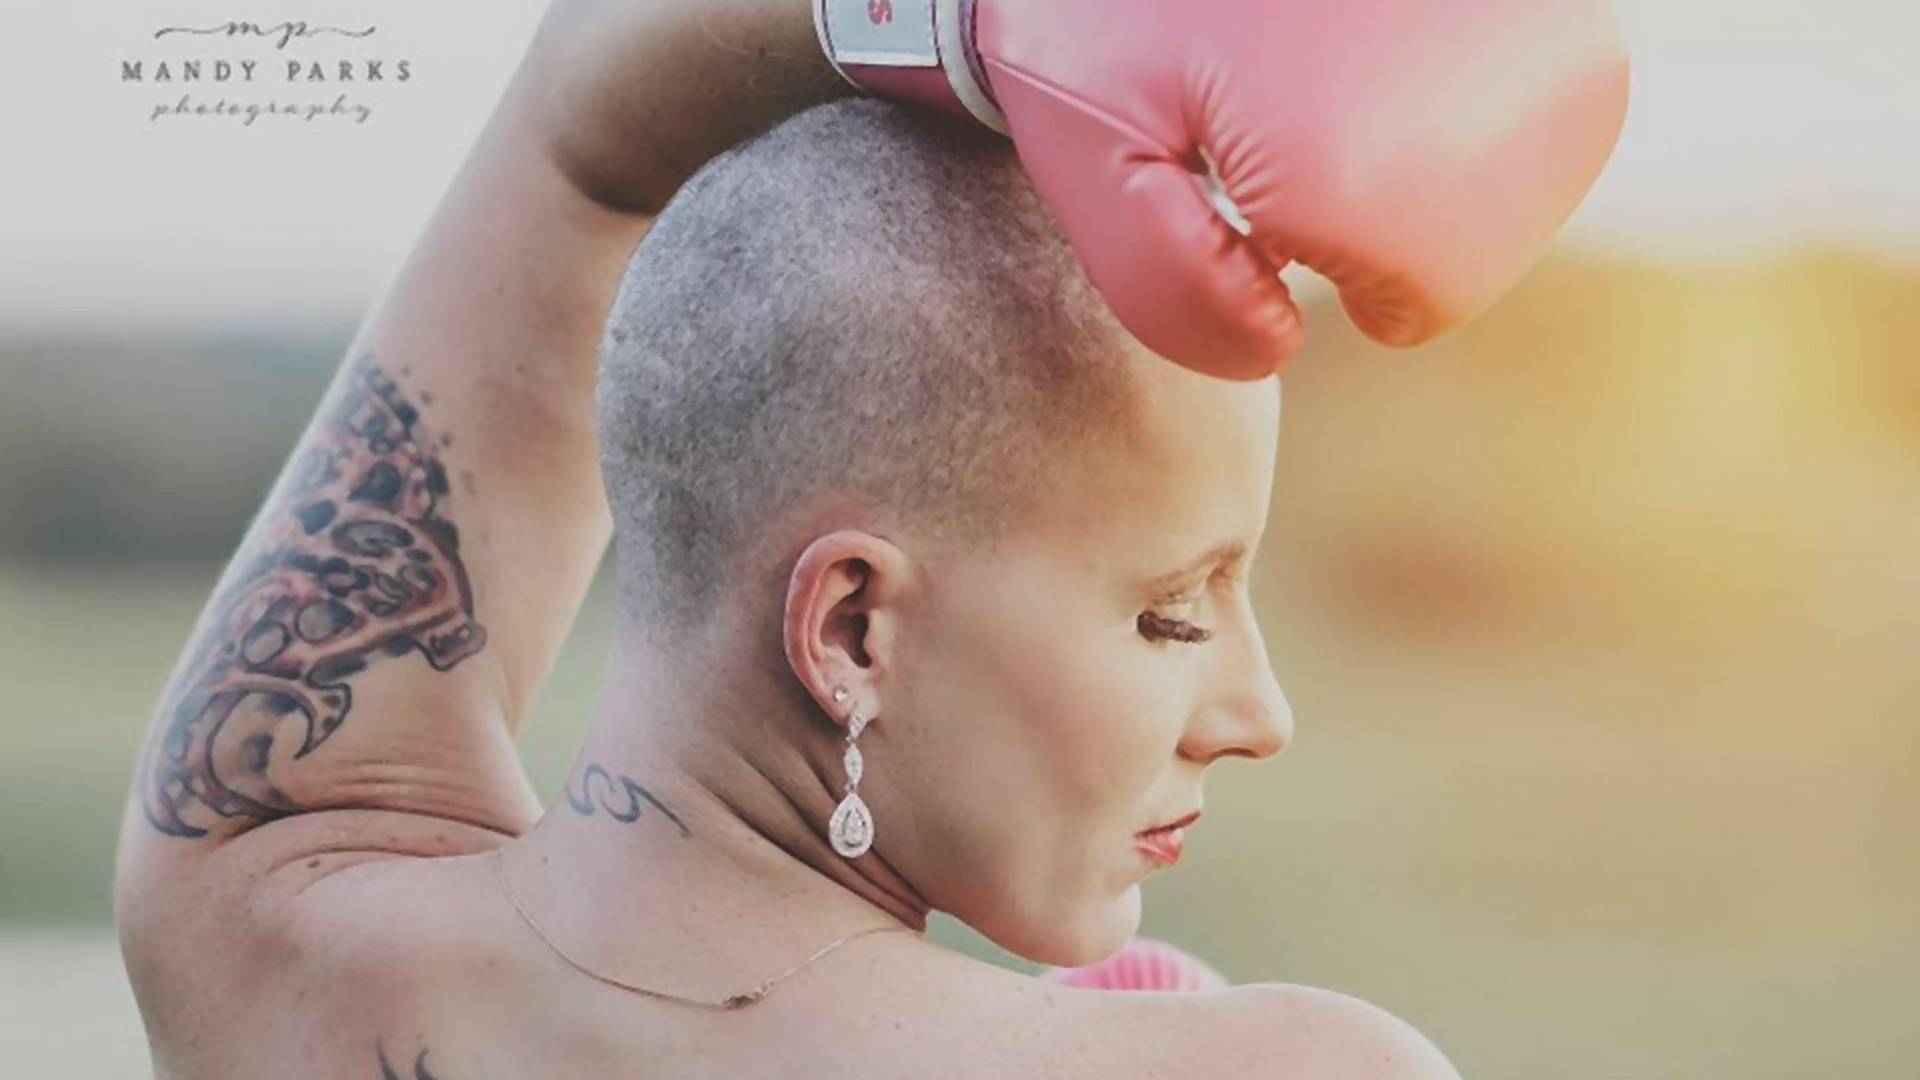 Prelepe fotografije žene koja se sprema za borbu s rakom dojke